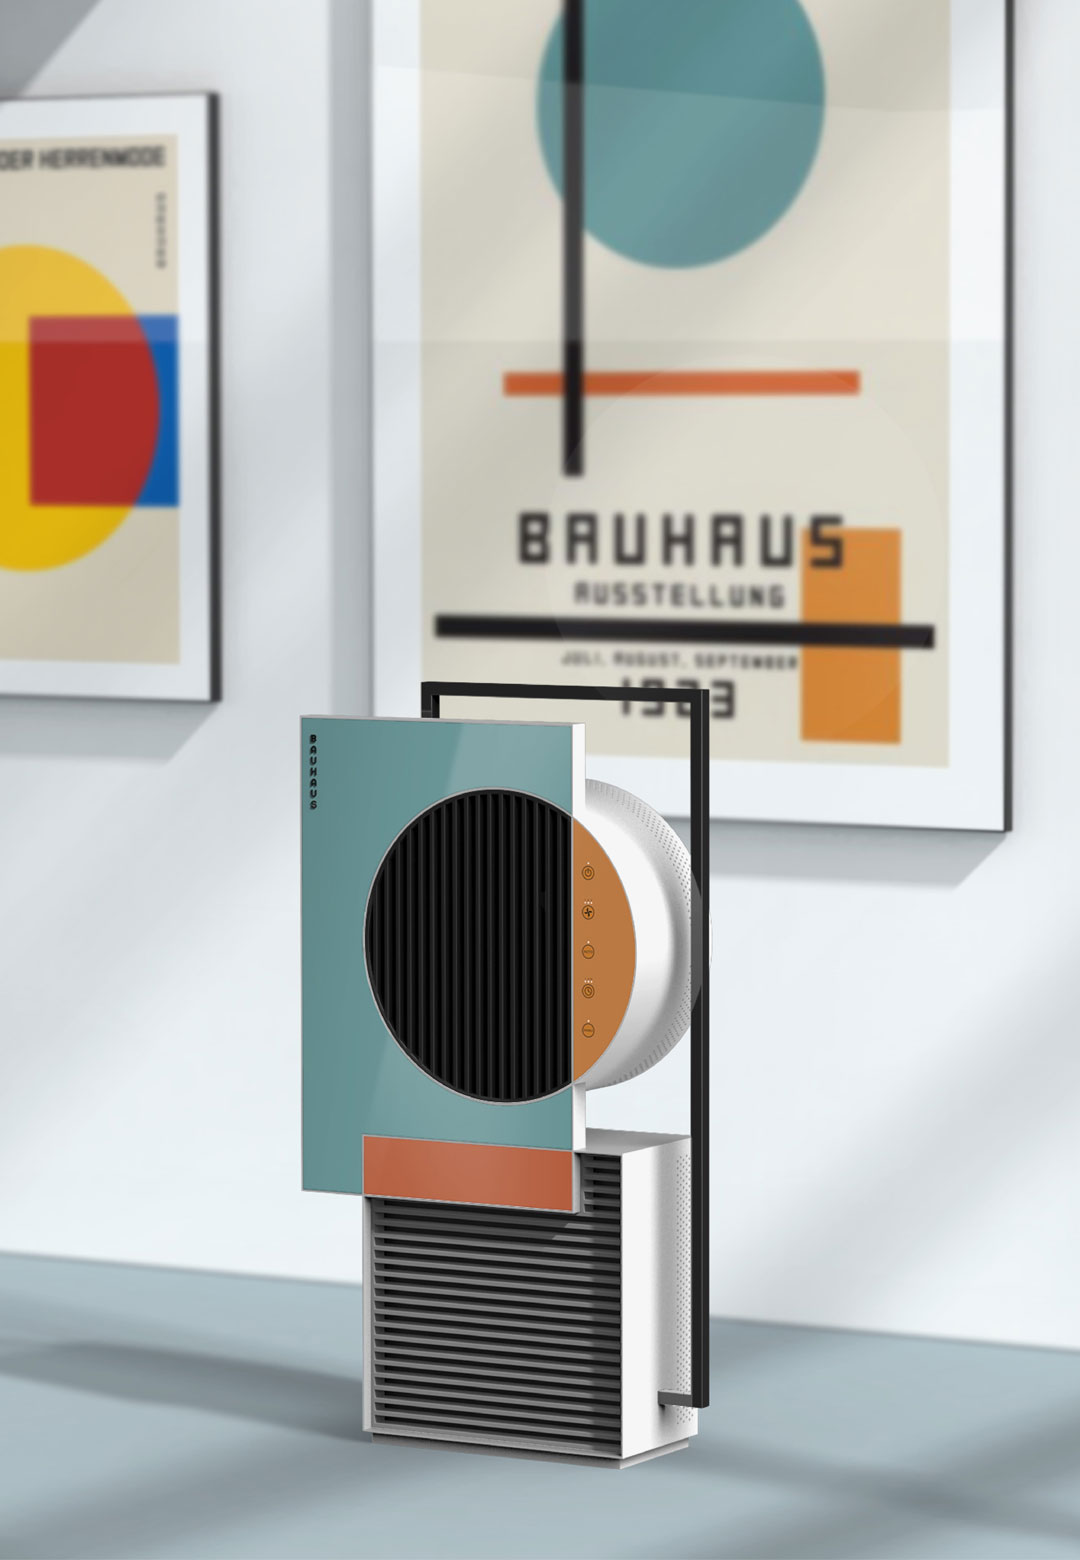 Lee Keereem’s air purifier design emulates ideas of the Bauhaus style